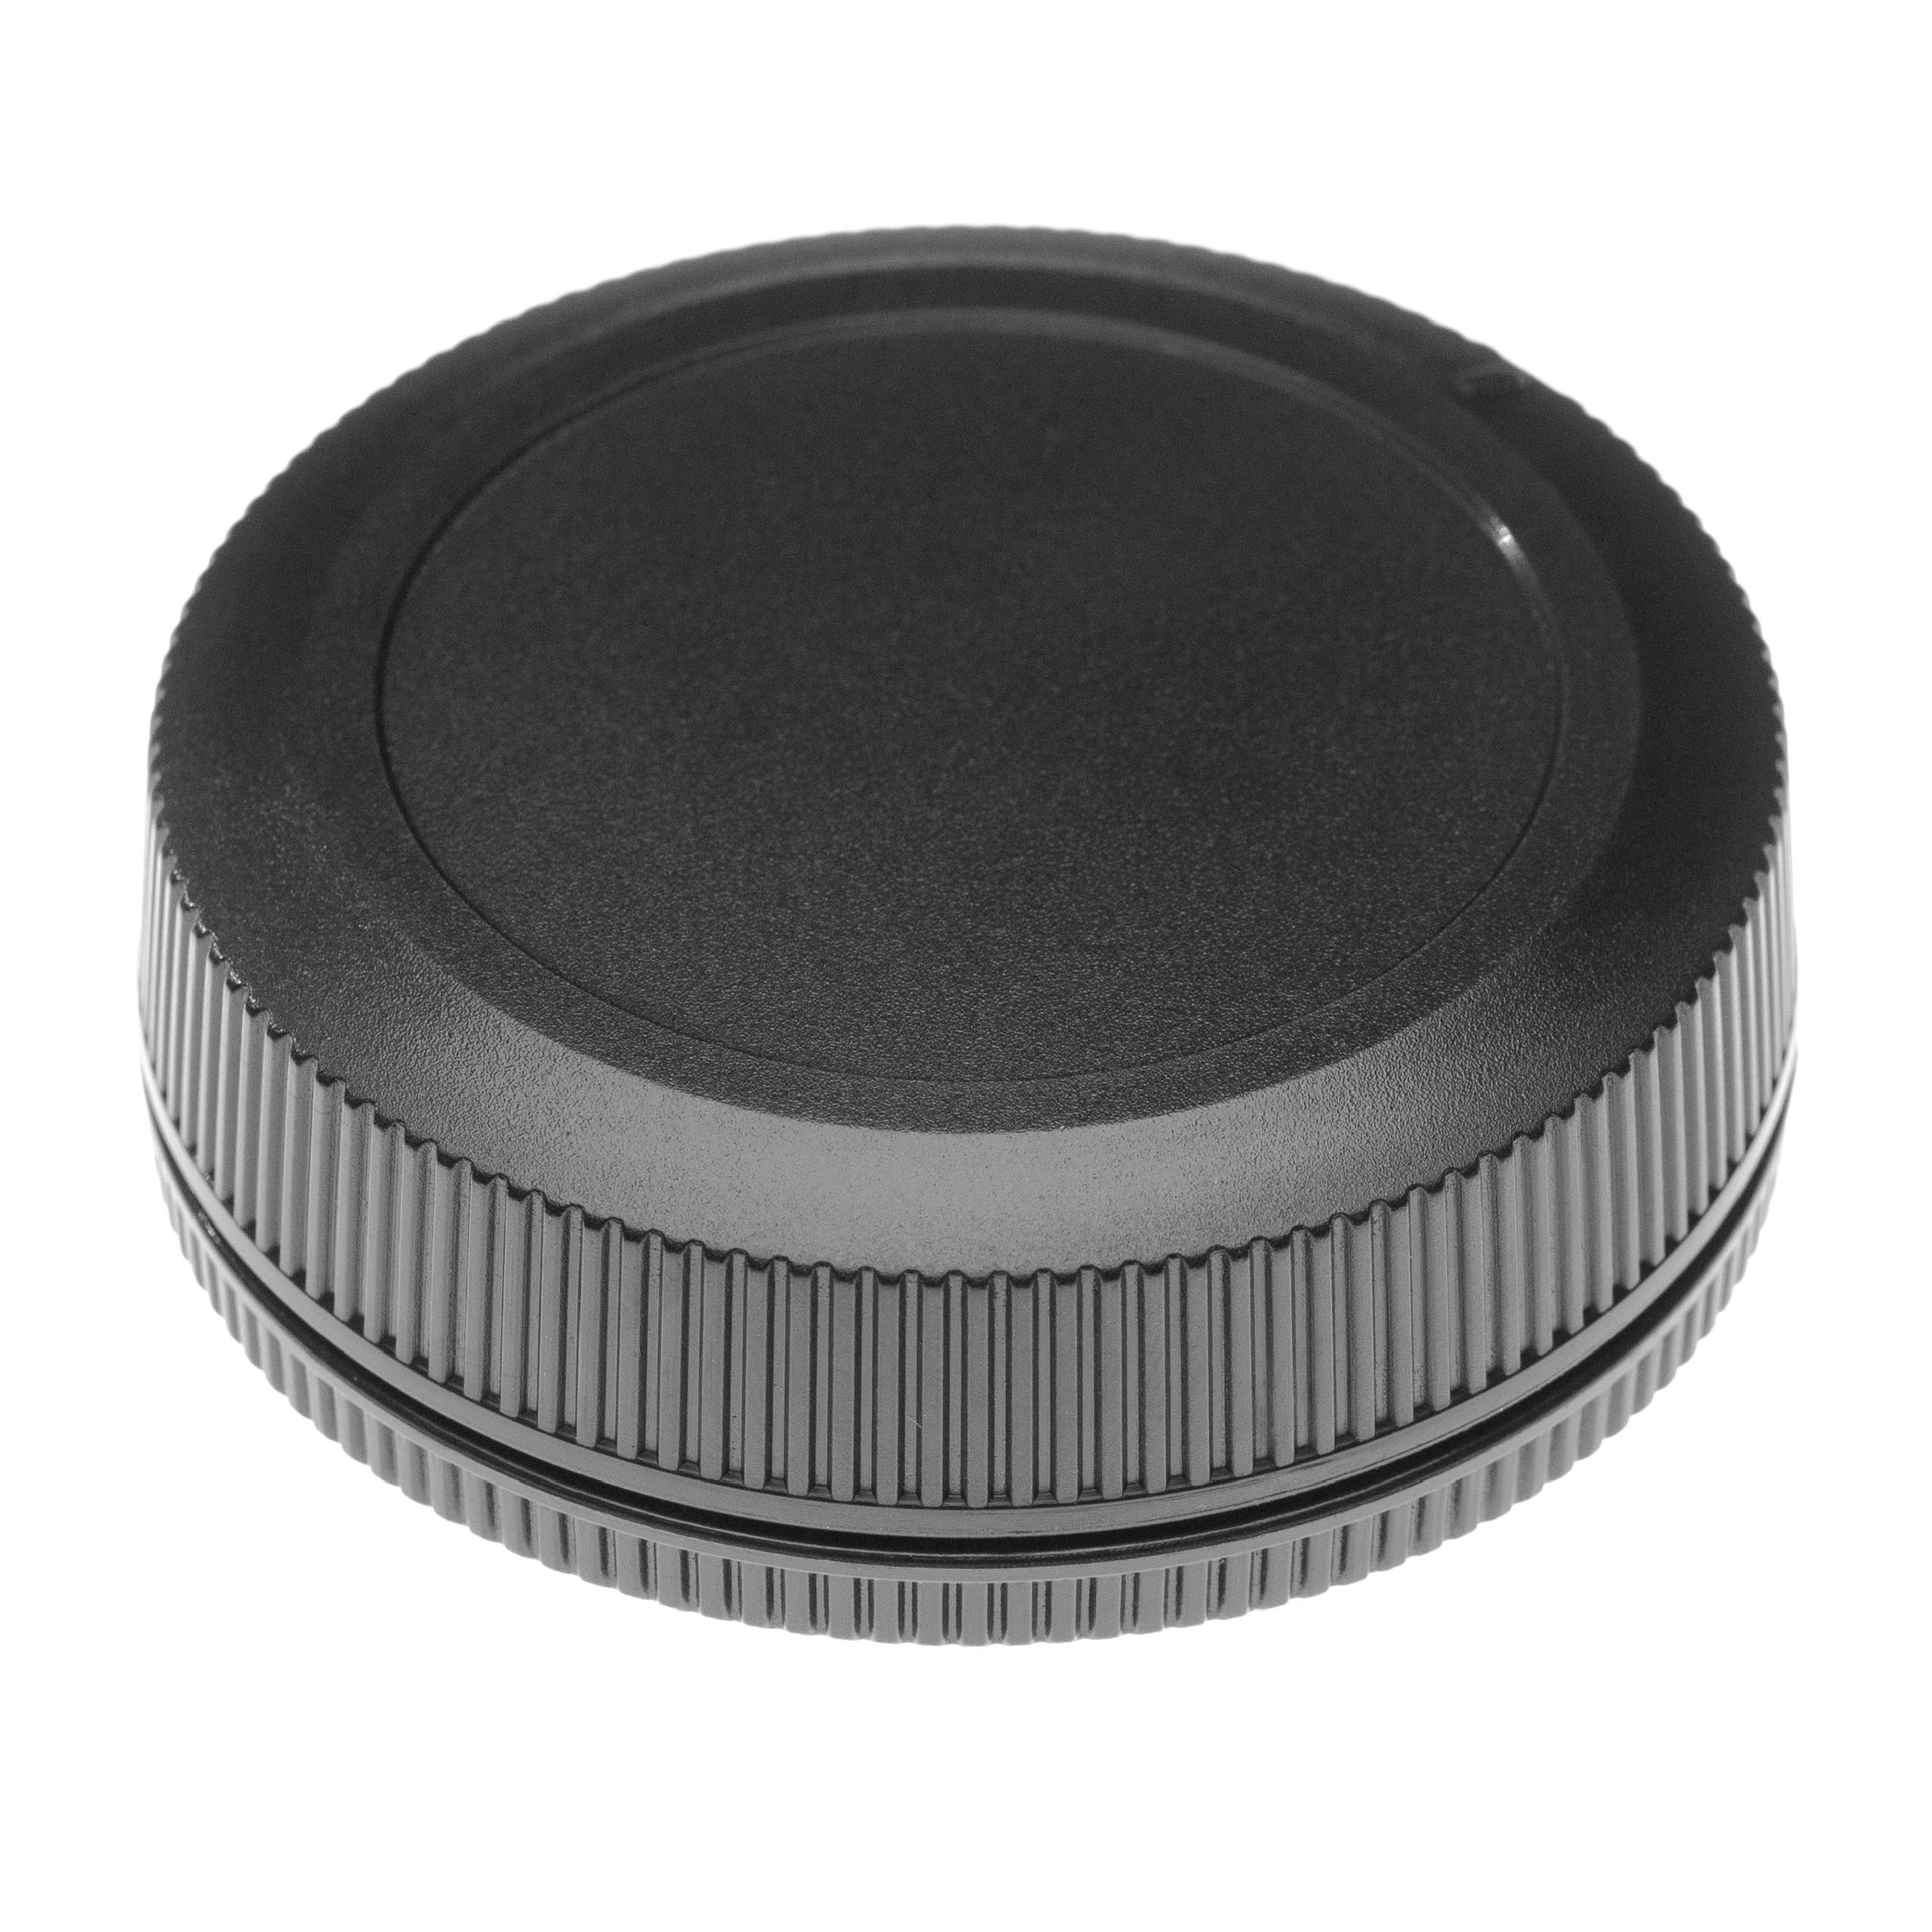 Rear Lens & Housing Protector suitable for Canon EOS R, RP Camera